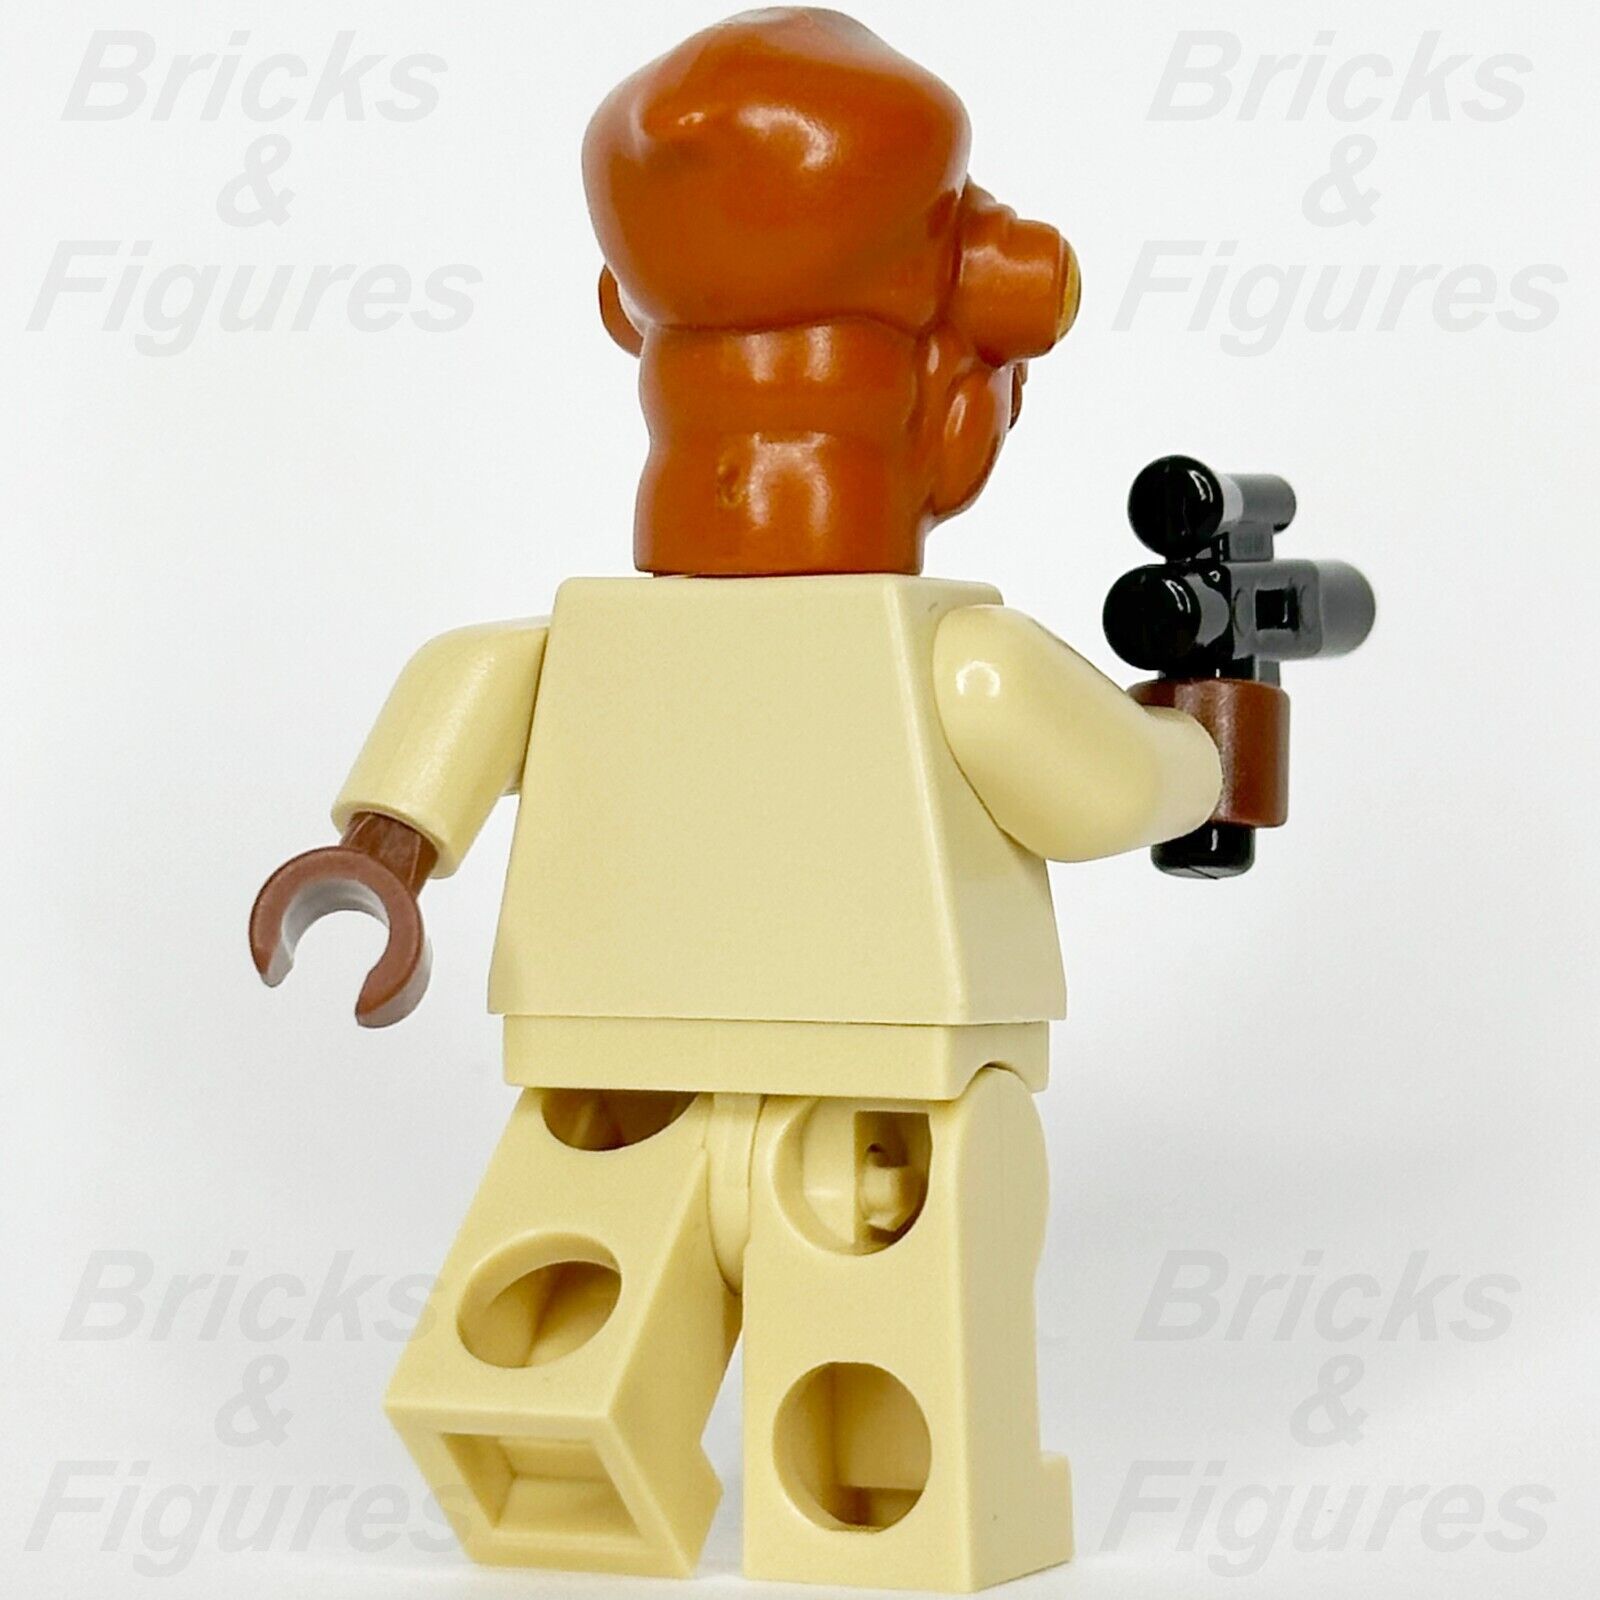 LEGO Star Wars Mon Calamari Officer Minifigure Rebel Alliance 7754 sw0248